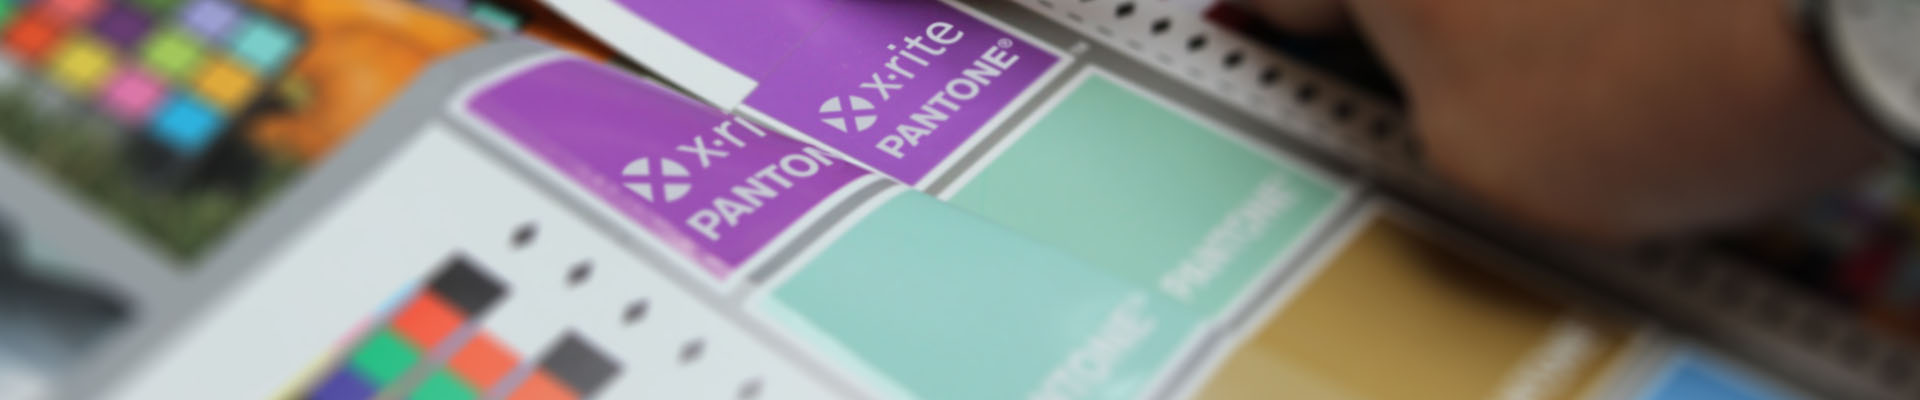 ISO Certifications, G7 Certification, Pantone Certified Printer | X-Rite Whitepaper